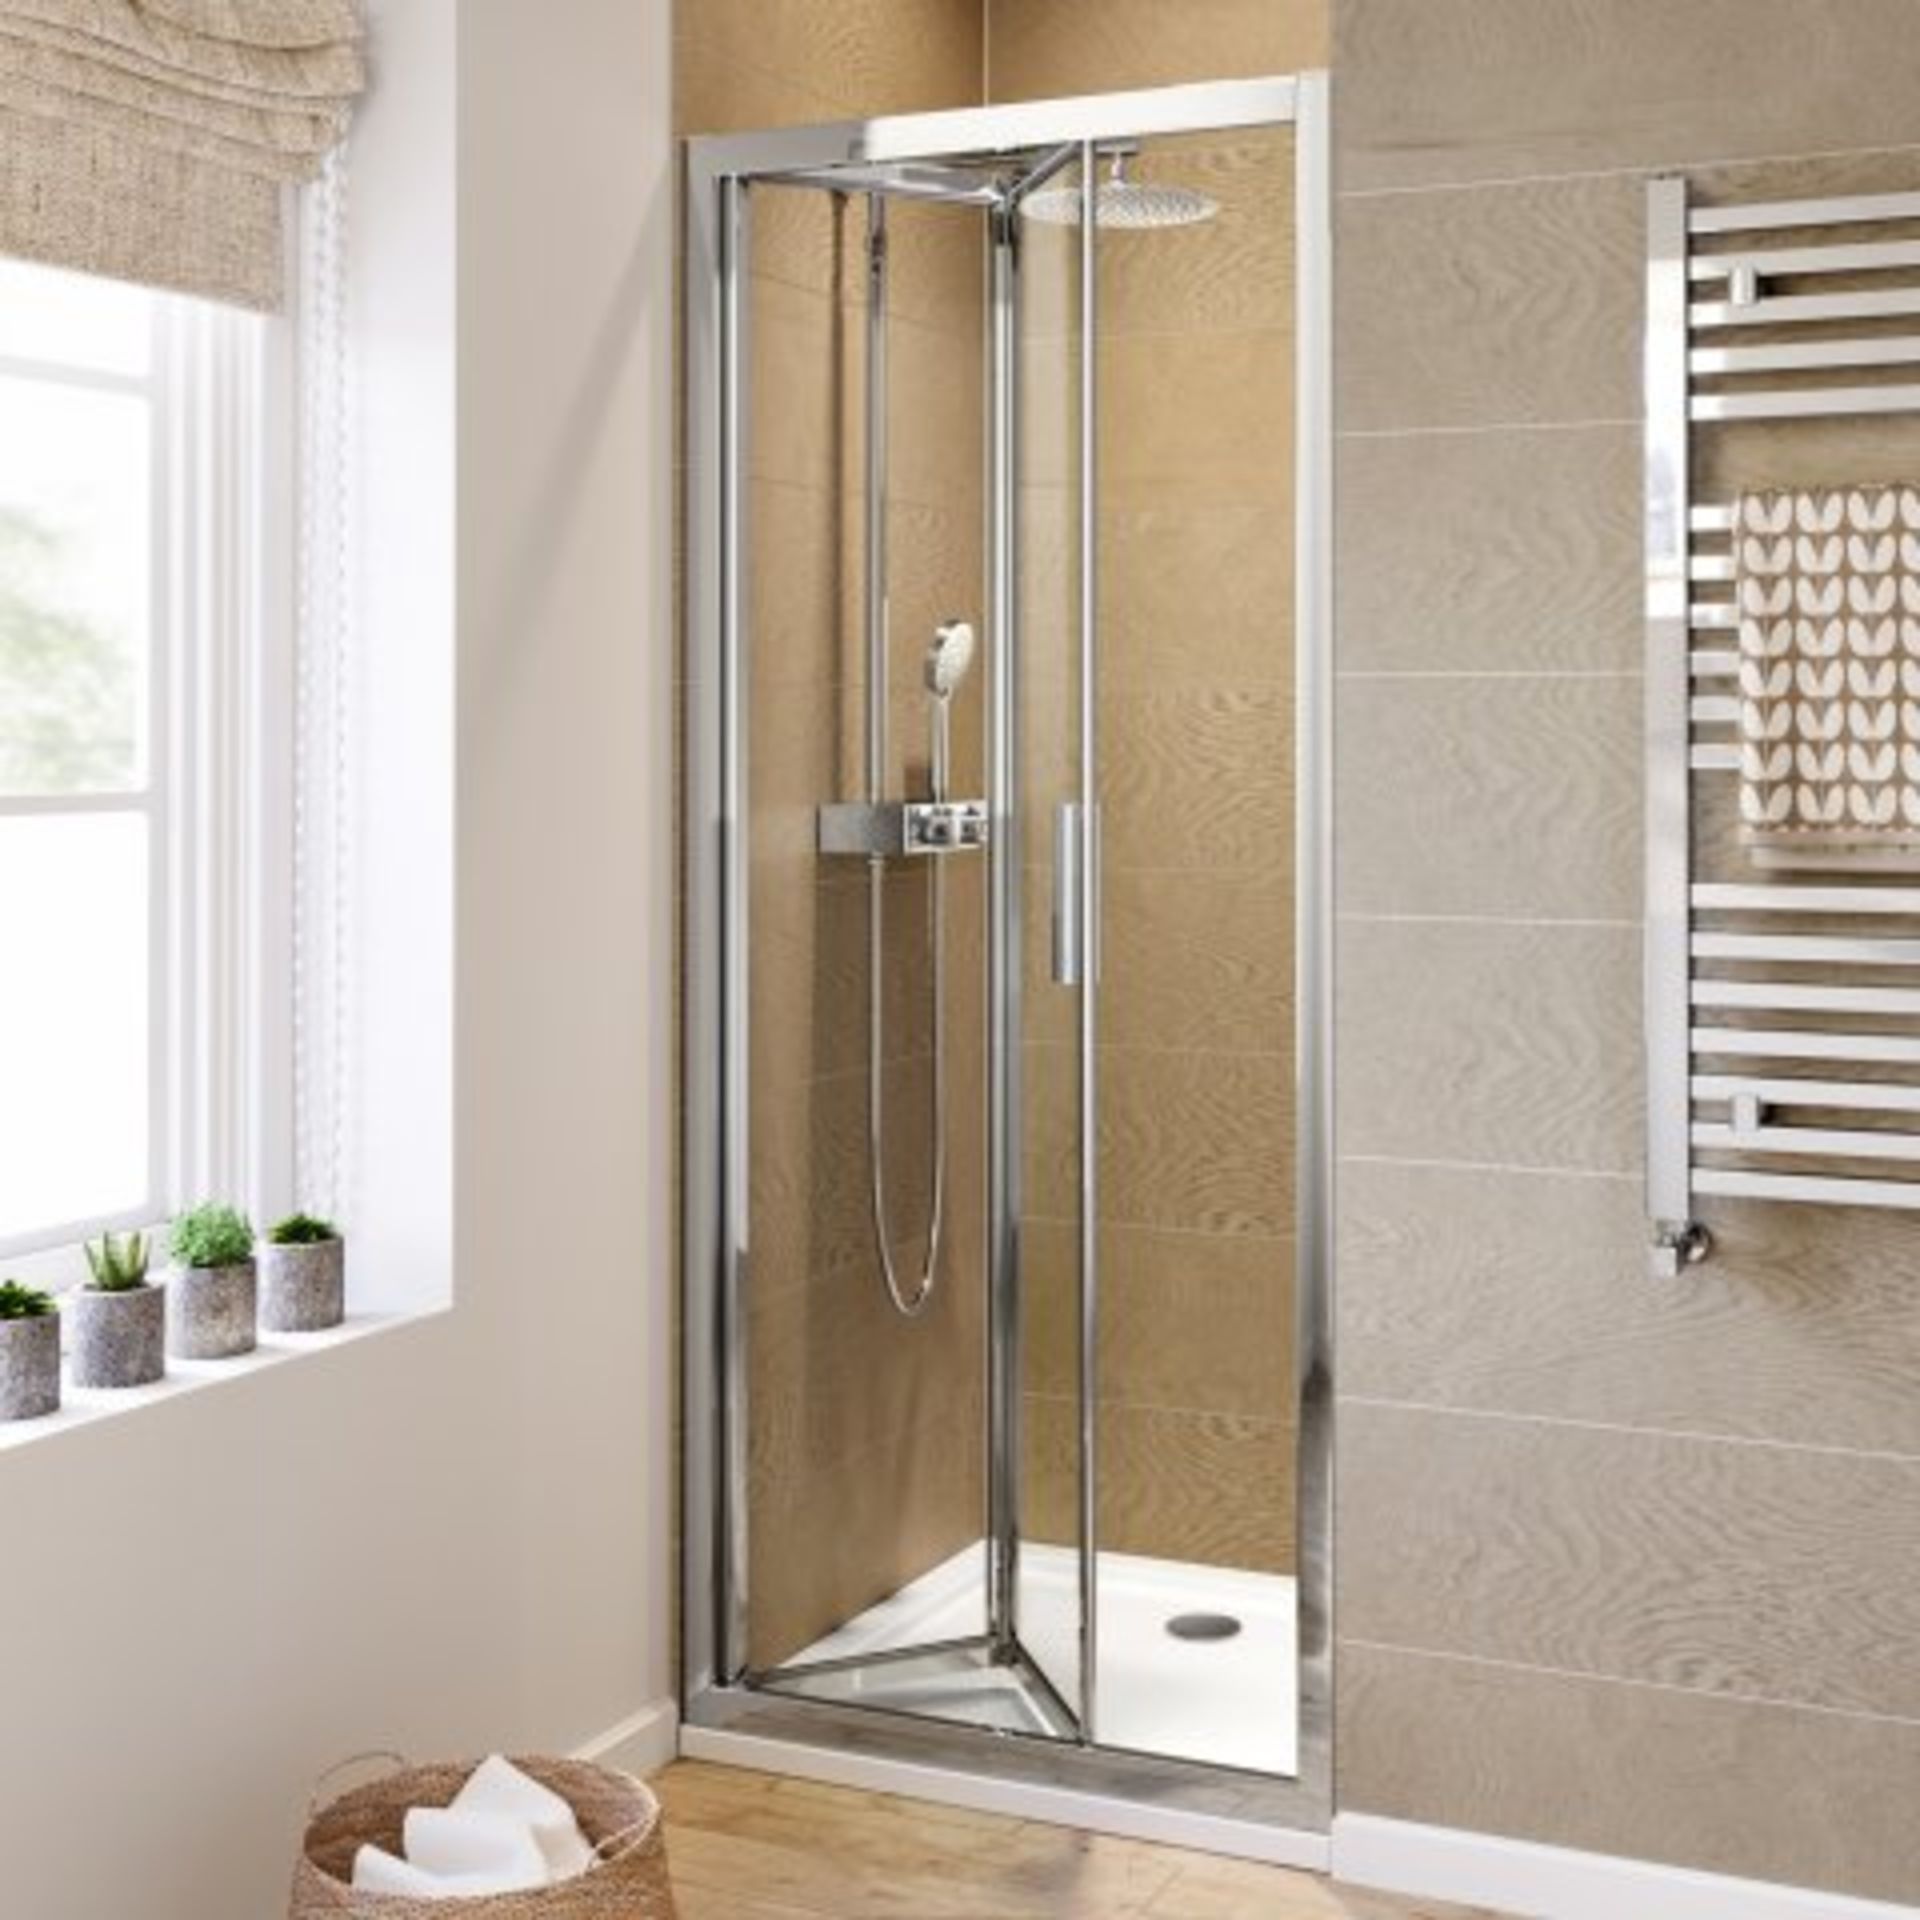 (K41) 900mm - 6mm - Elements EasyClean Bifold Shower Door. RRP £299.99. Essential Design Our - Image 2 of 4